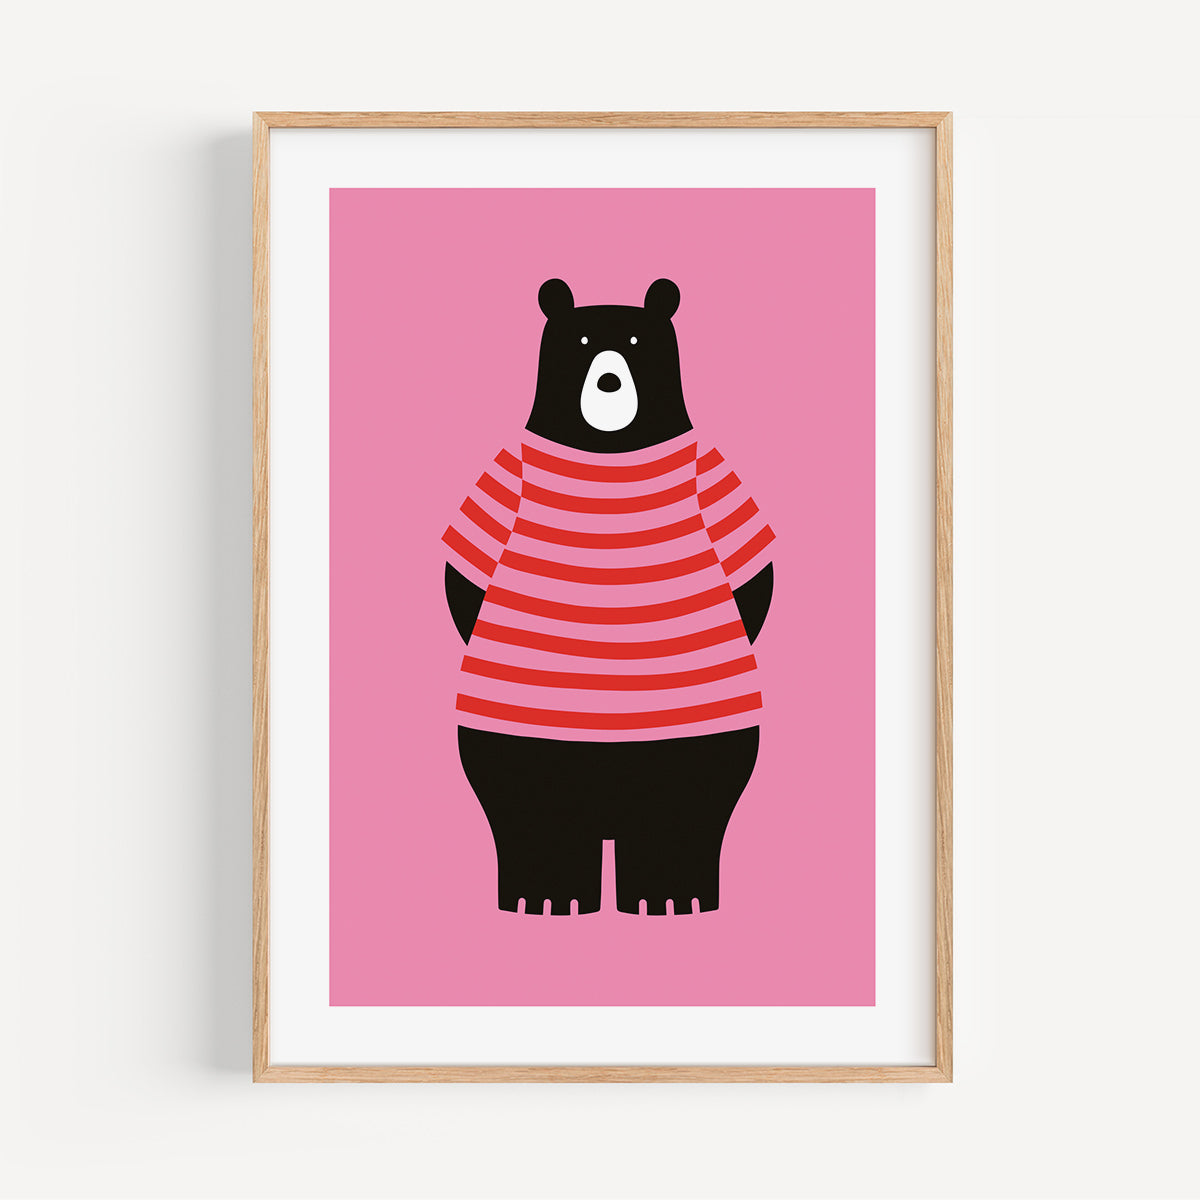 PINK BEAR - Colourful A4 art print